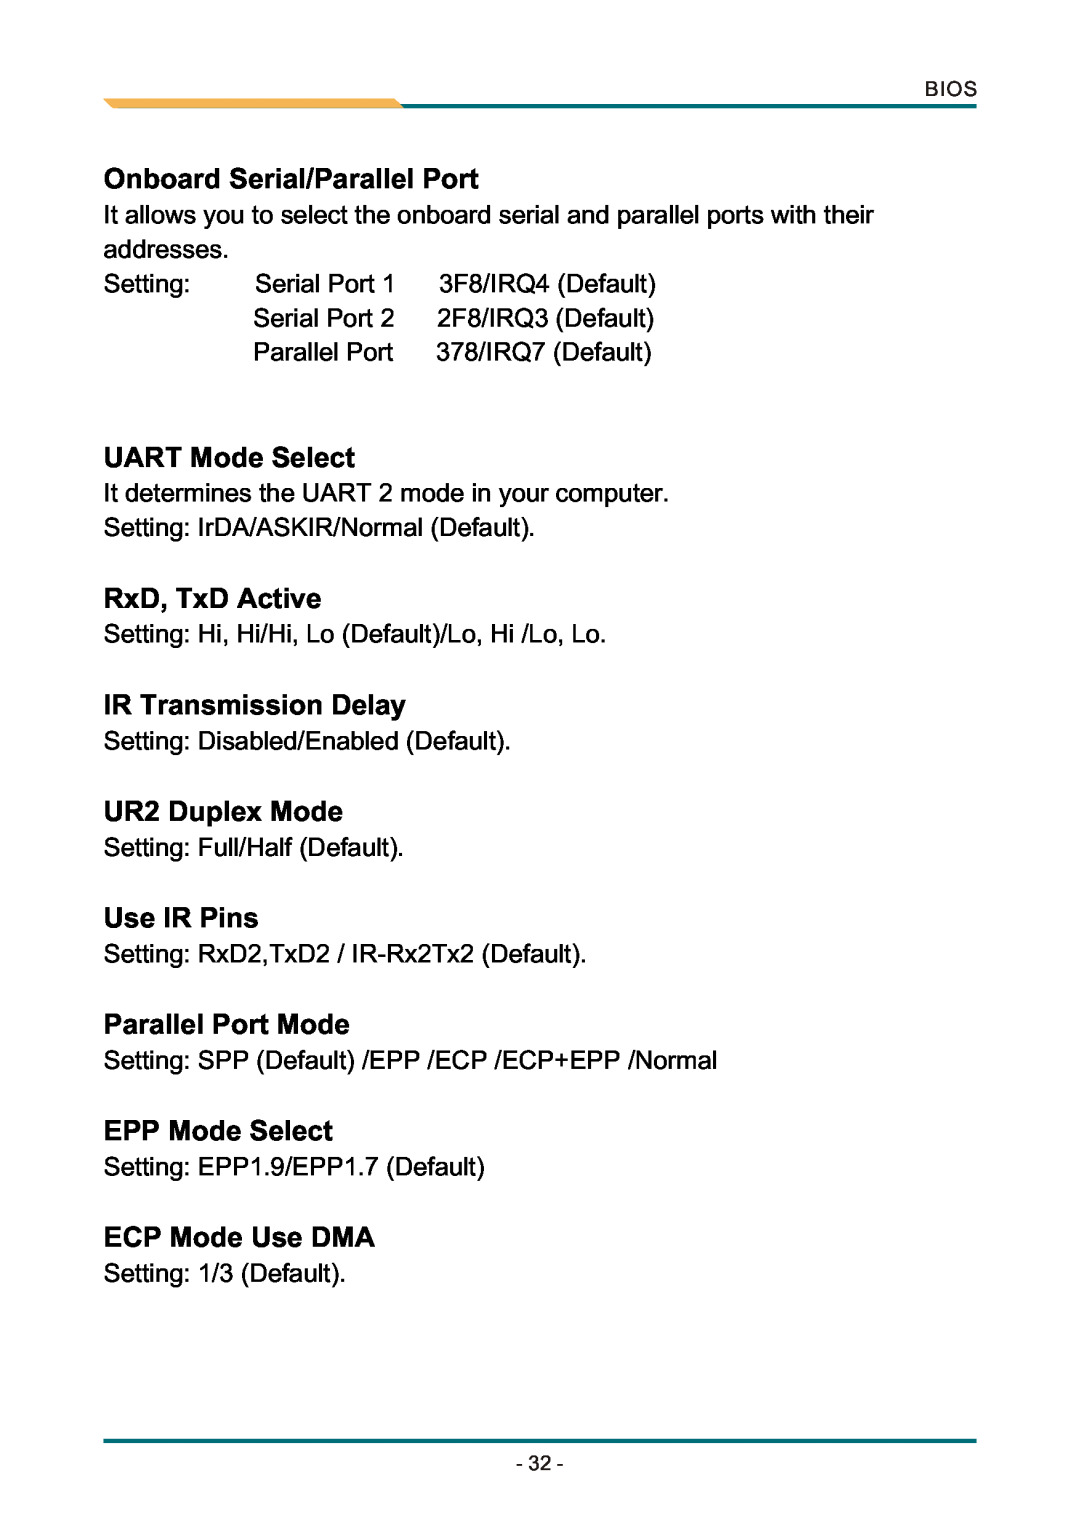 AMD SBX-5363 manual Onboard Serial/Parallel Port, UART Mode Select, RxD, TxD Active, IR Transmission Delay, UR2 Duplex Mode 